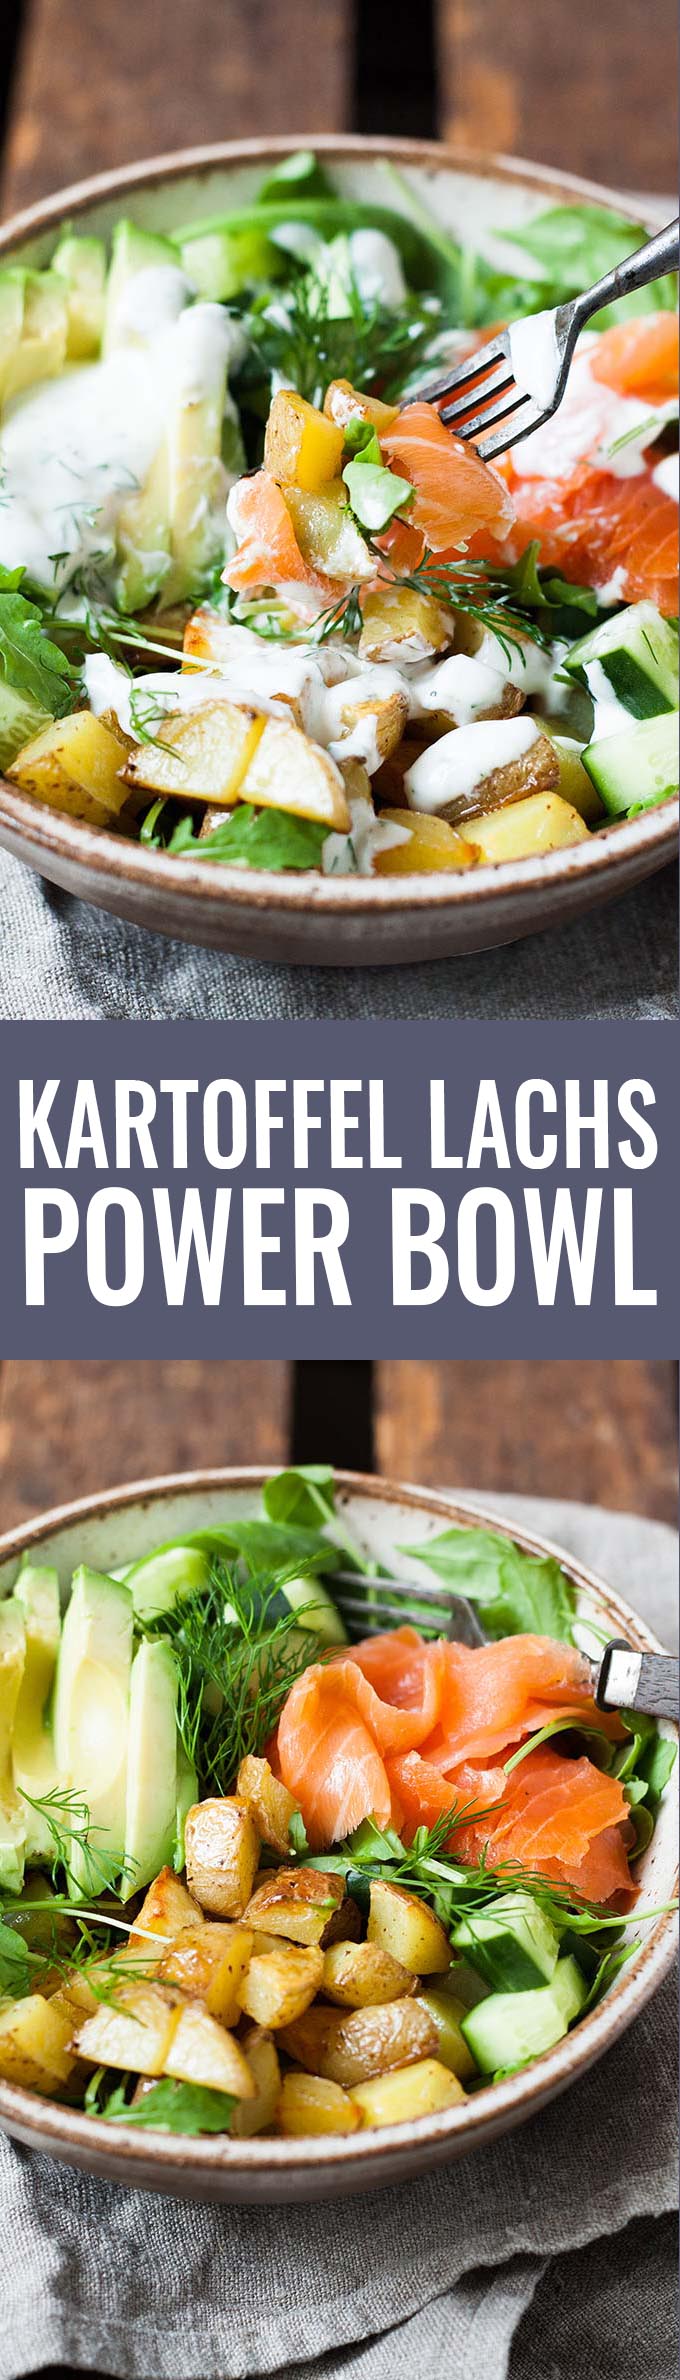 Kartoffel Lachs Power Bowl mit Avocado - Kochkarussell.com